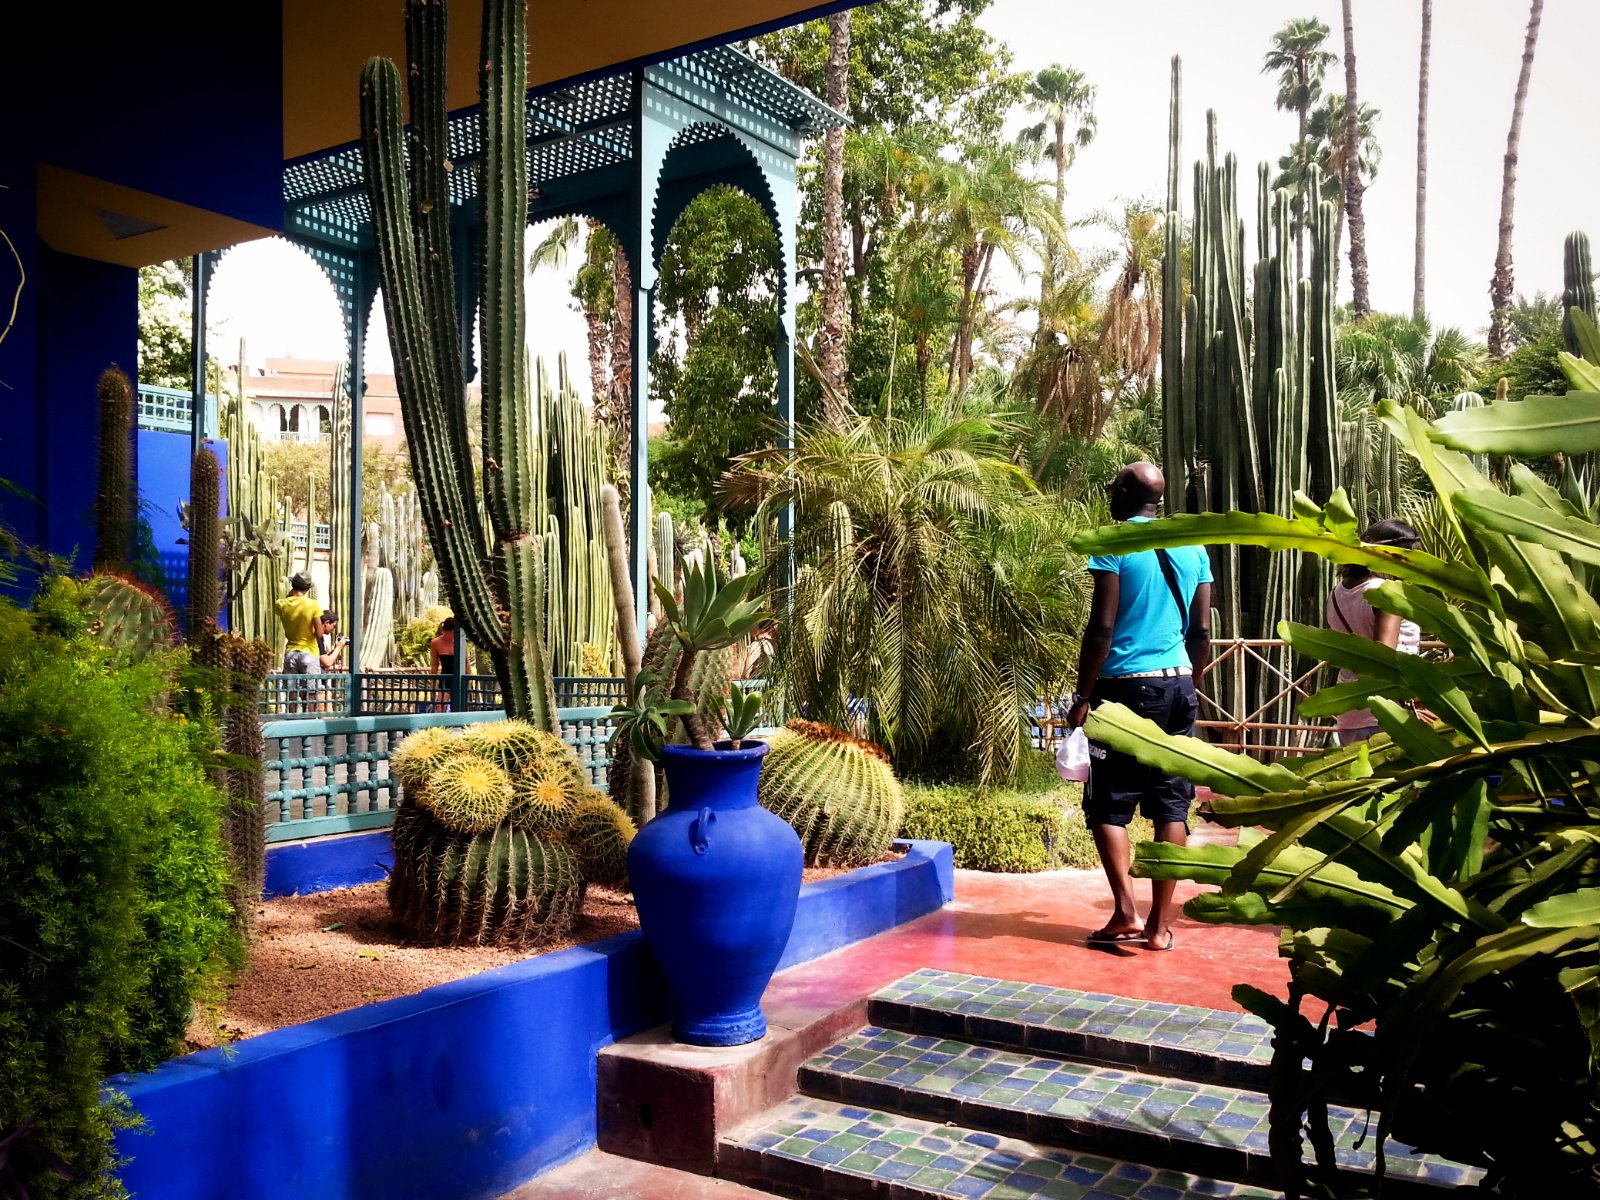 How to visit magnificent Majorelle botanic garden in Marrakesh